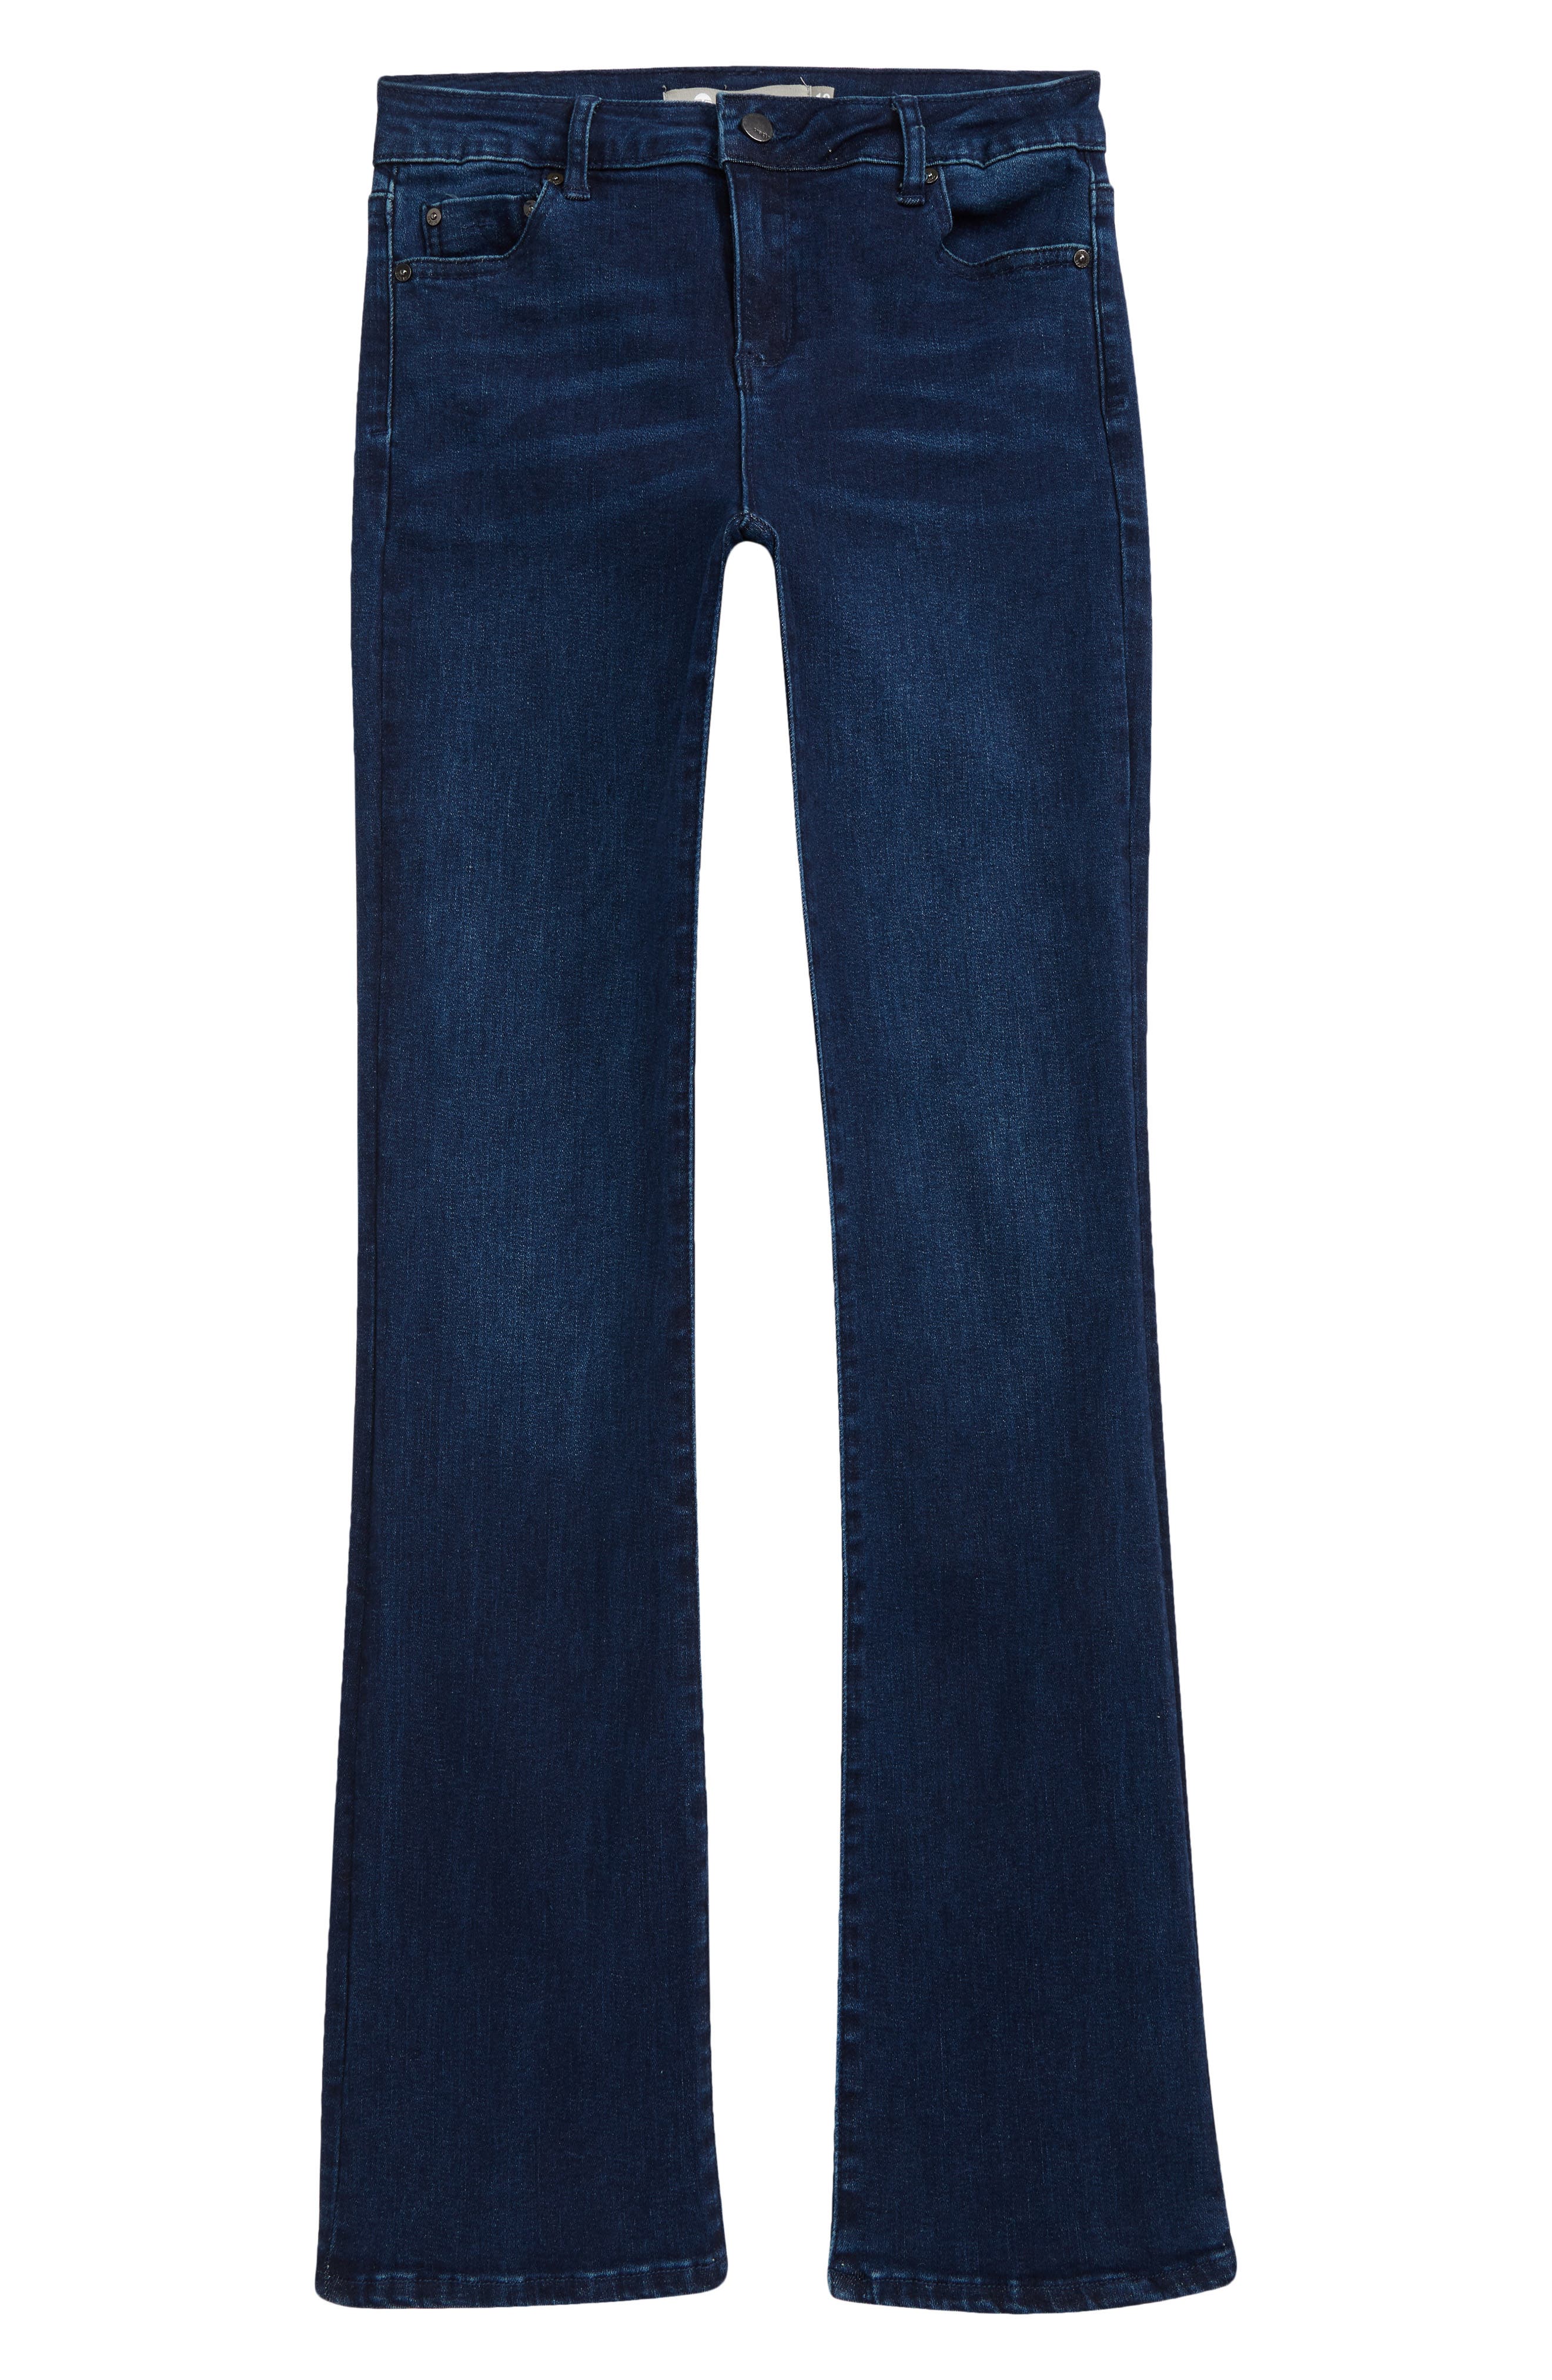 Bonds Girls Jeggings Leggings Jeans Pants sizes 5 6 7 Colour Blue Print 